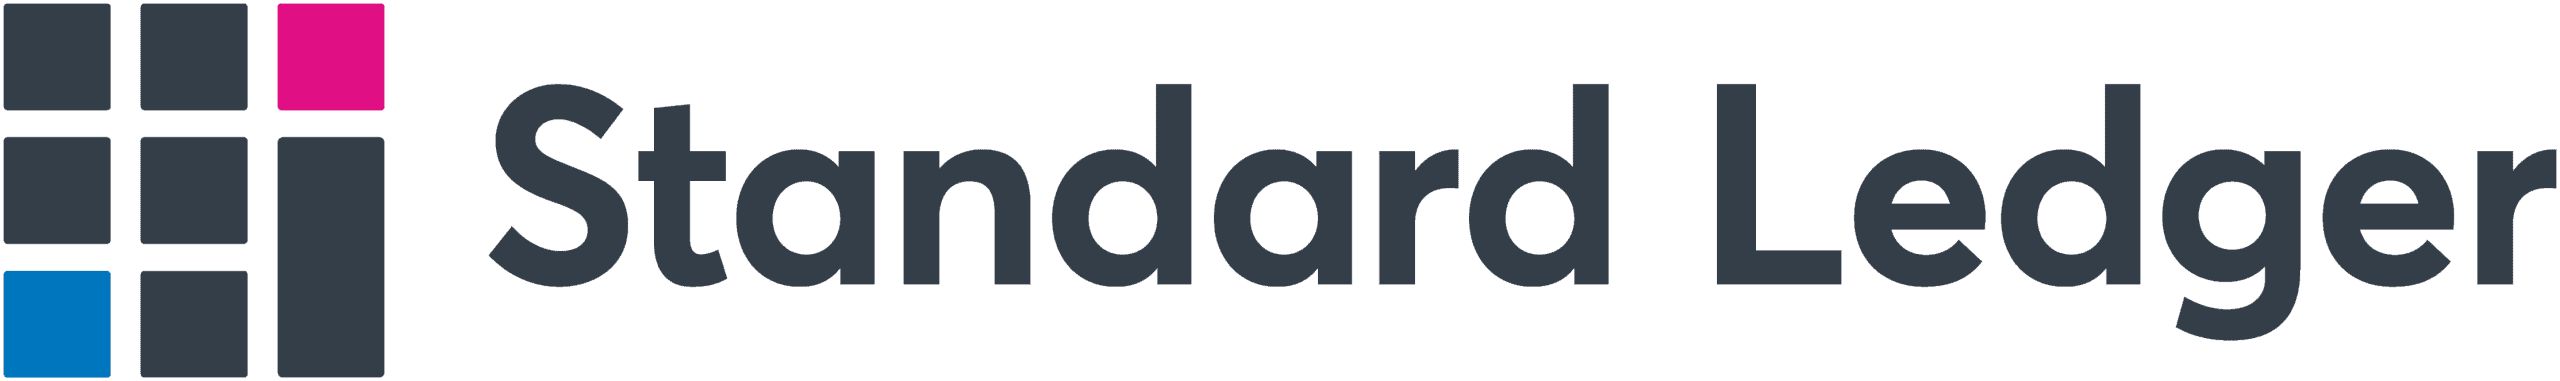 Standard-Ledger-Logo-rgb